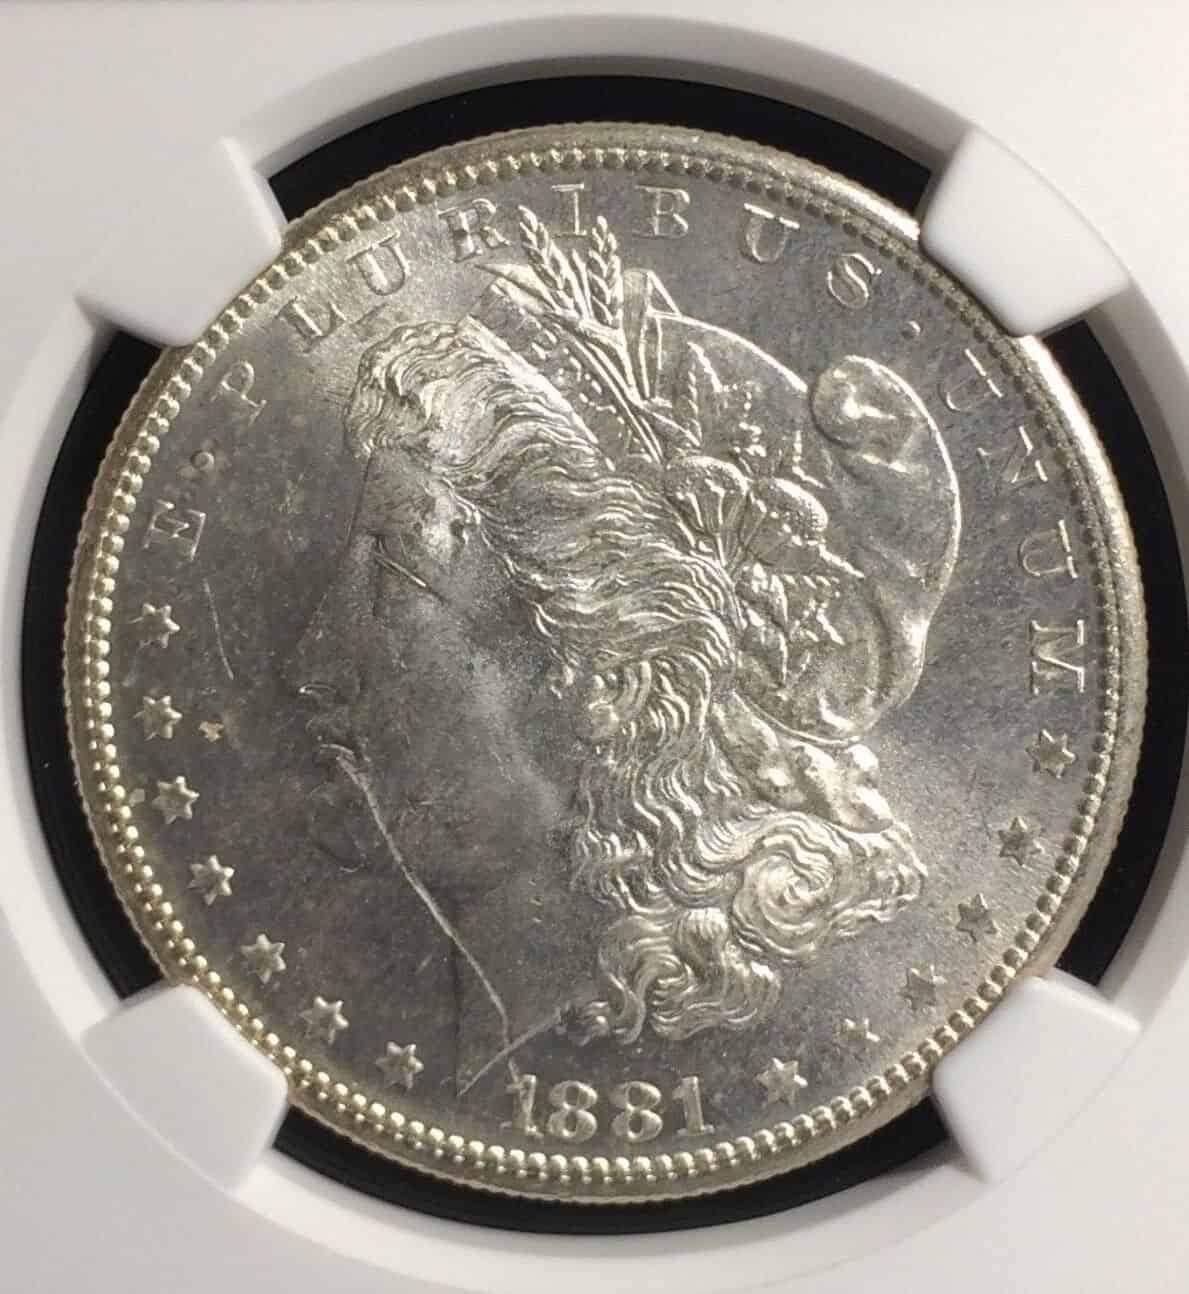 1881 Silver Dollar Struck-Through Error